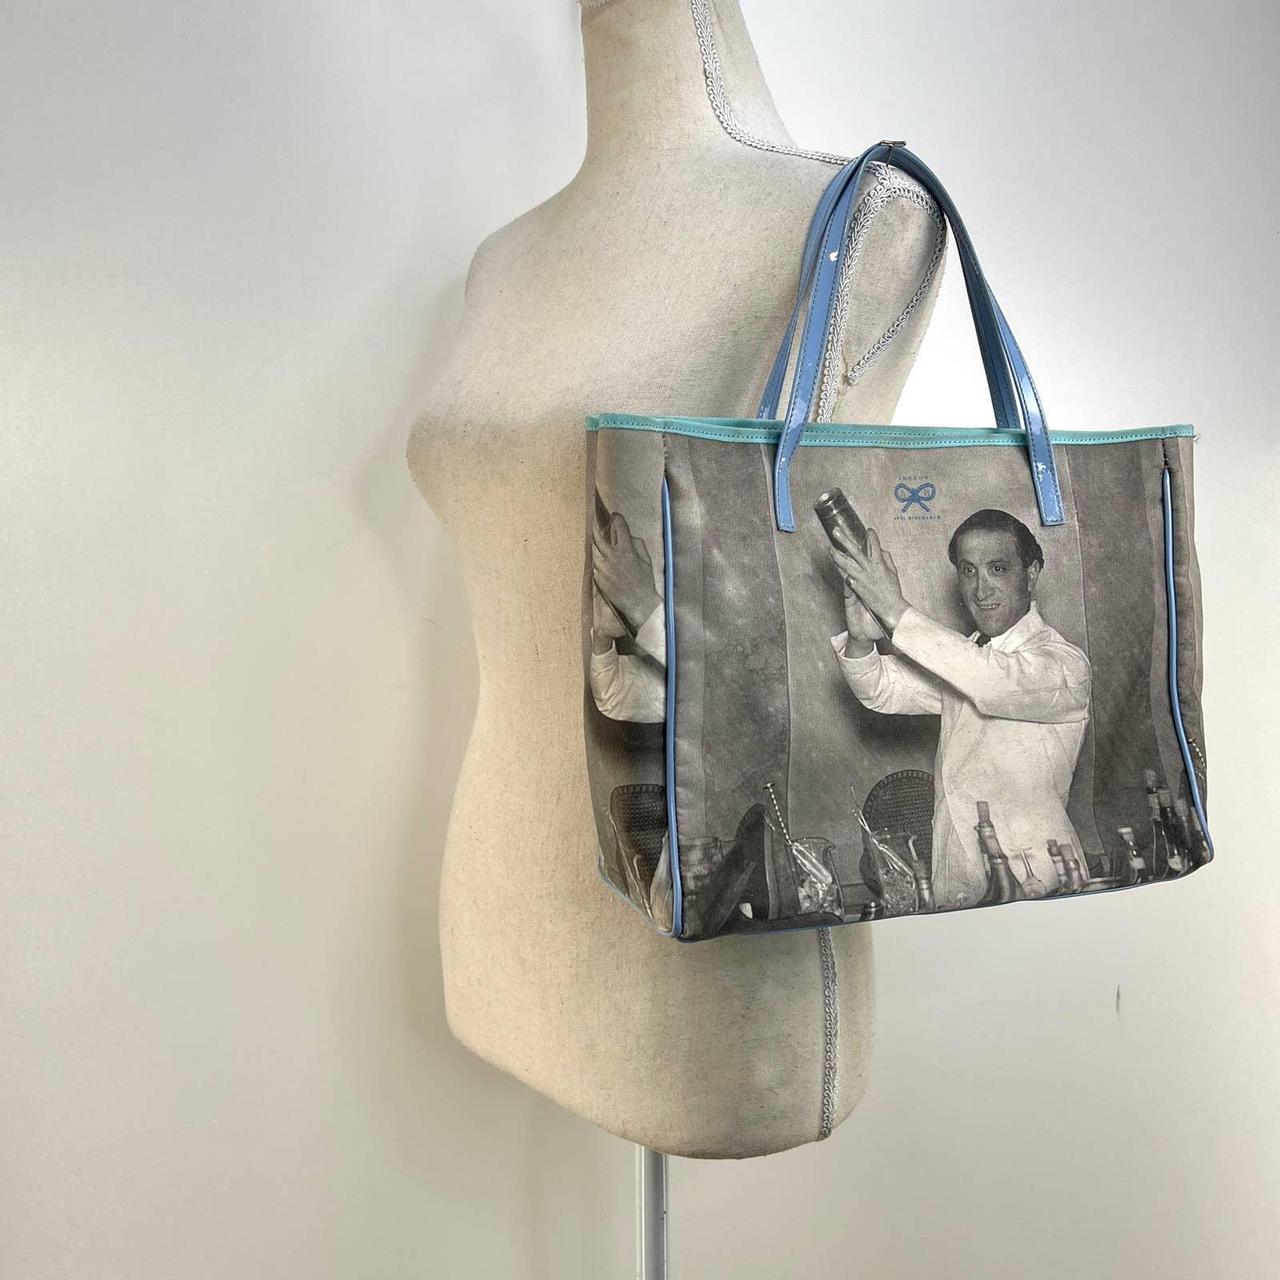 Anya Hindmarch Women's Blue and Black Bag (2)